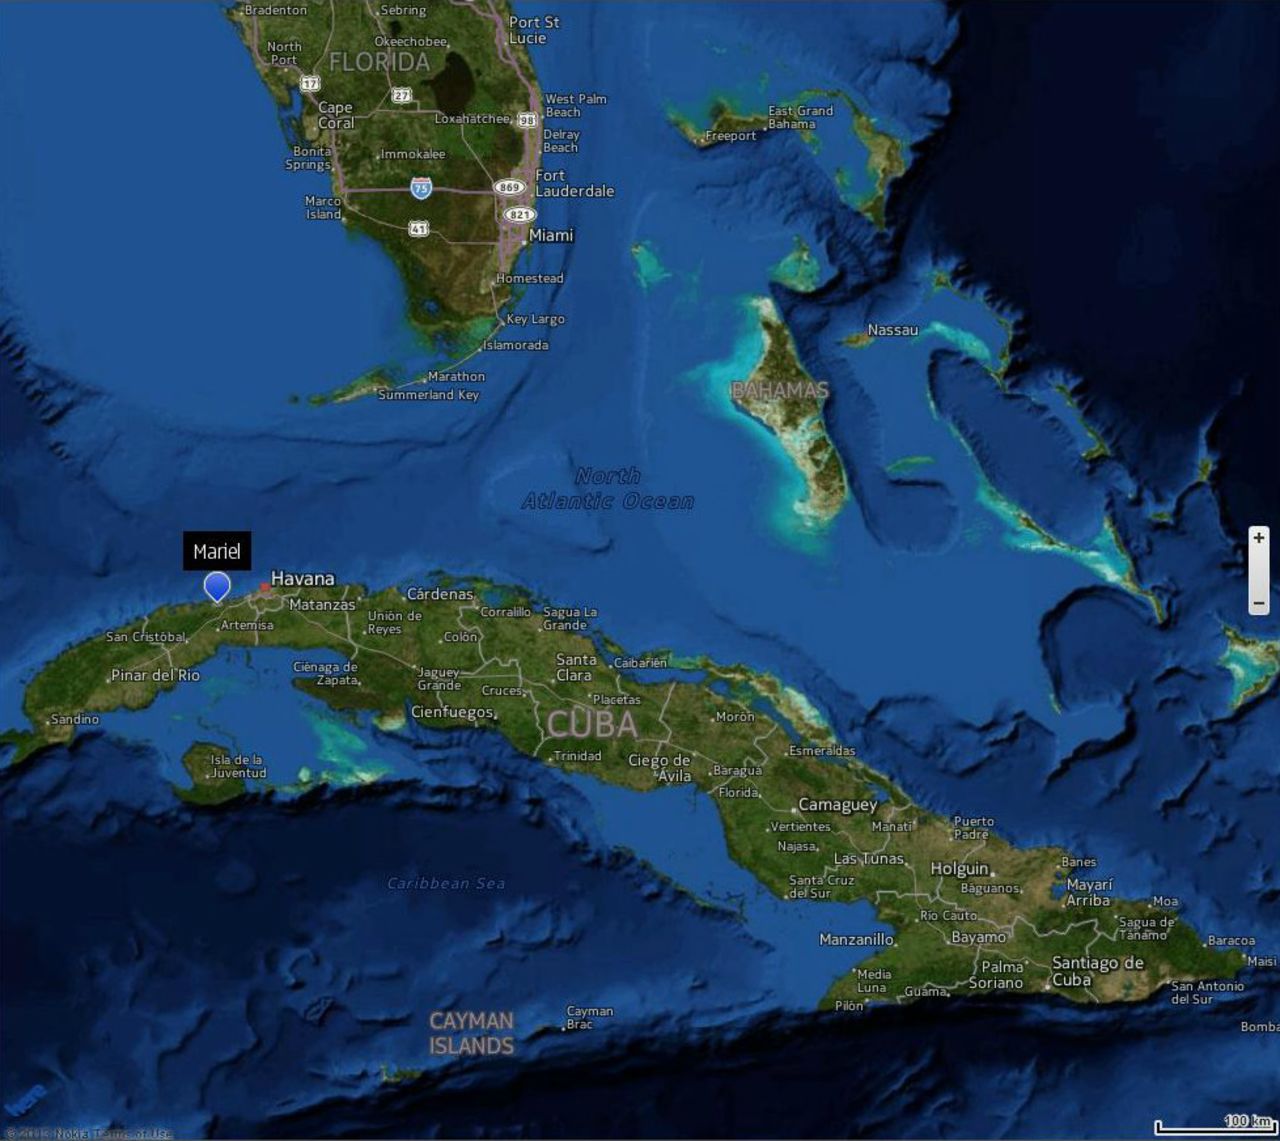 Mariel en el mapa de Cuba.